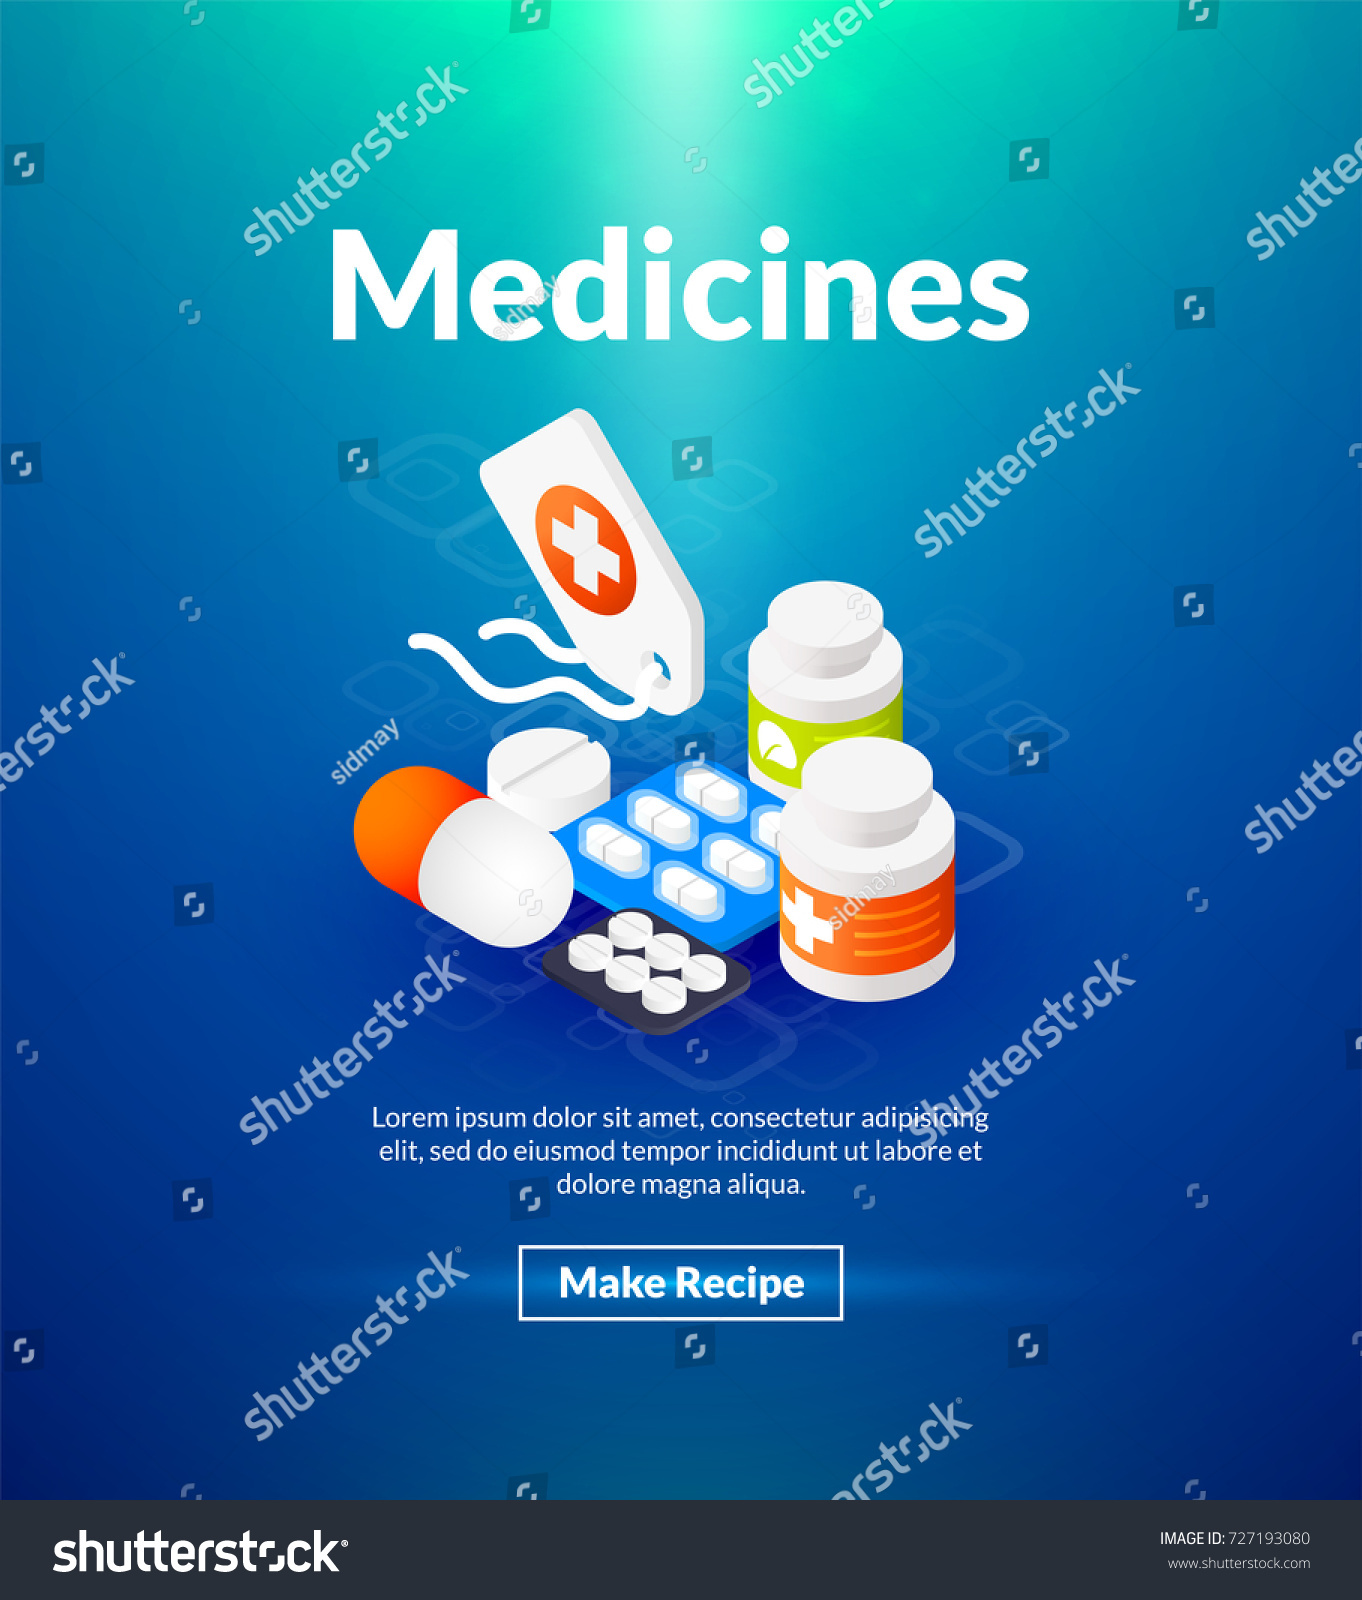 1 Midicine pill 3d Images, Stock Photos & Vectors | Shutterstock